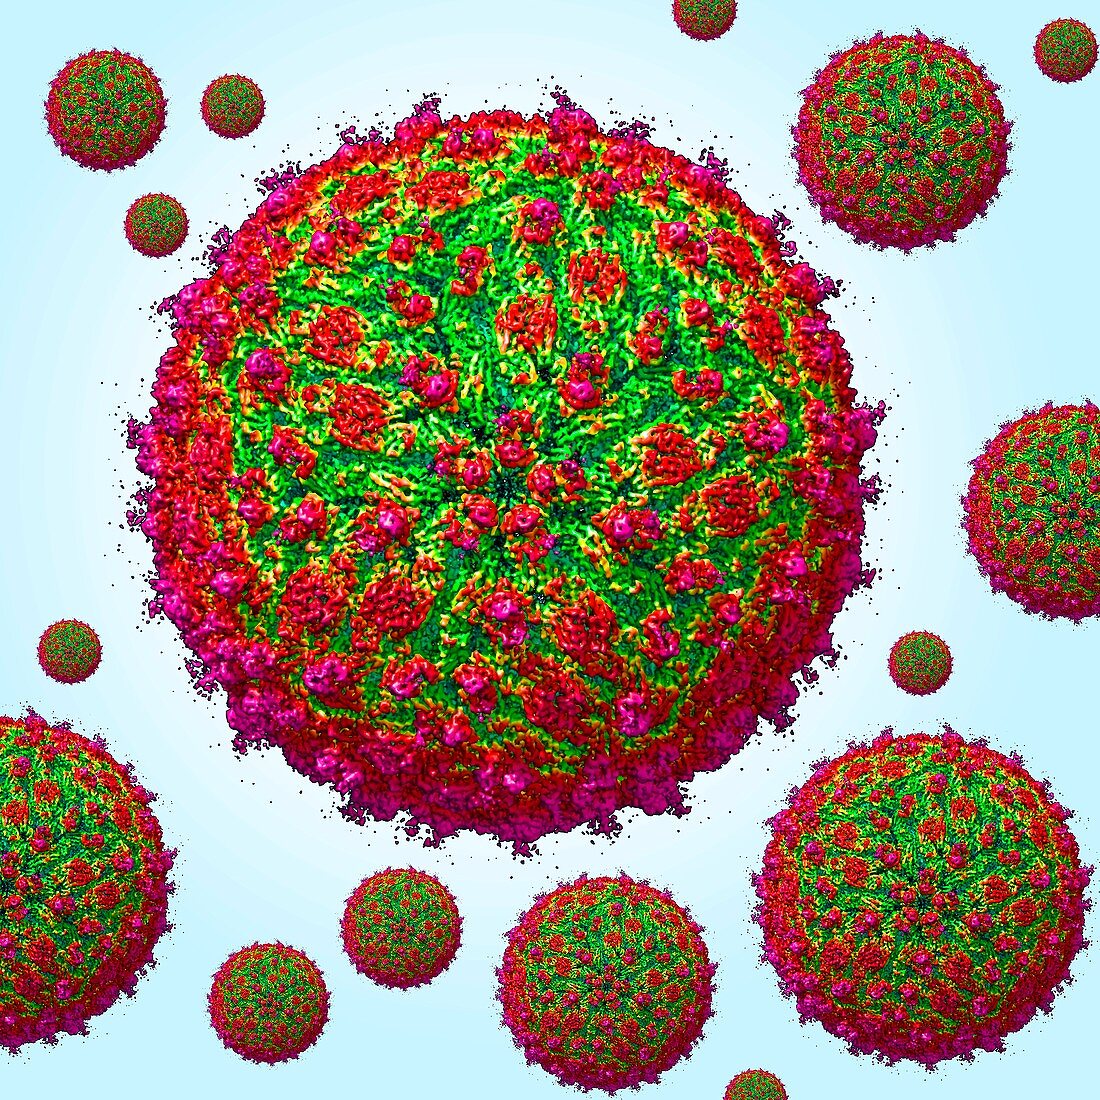 Zika virus particles,molecular model